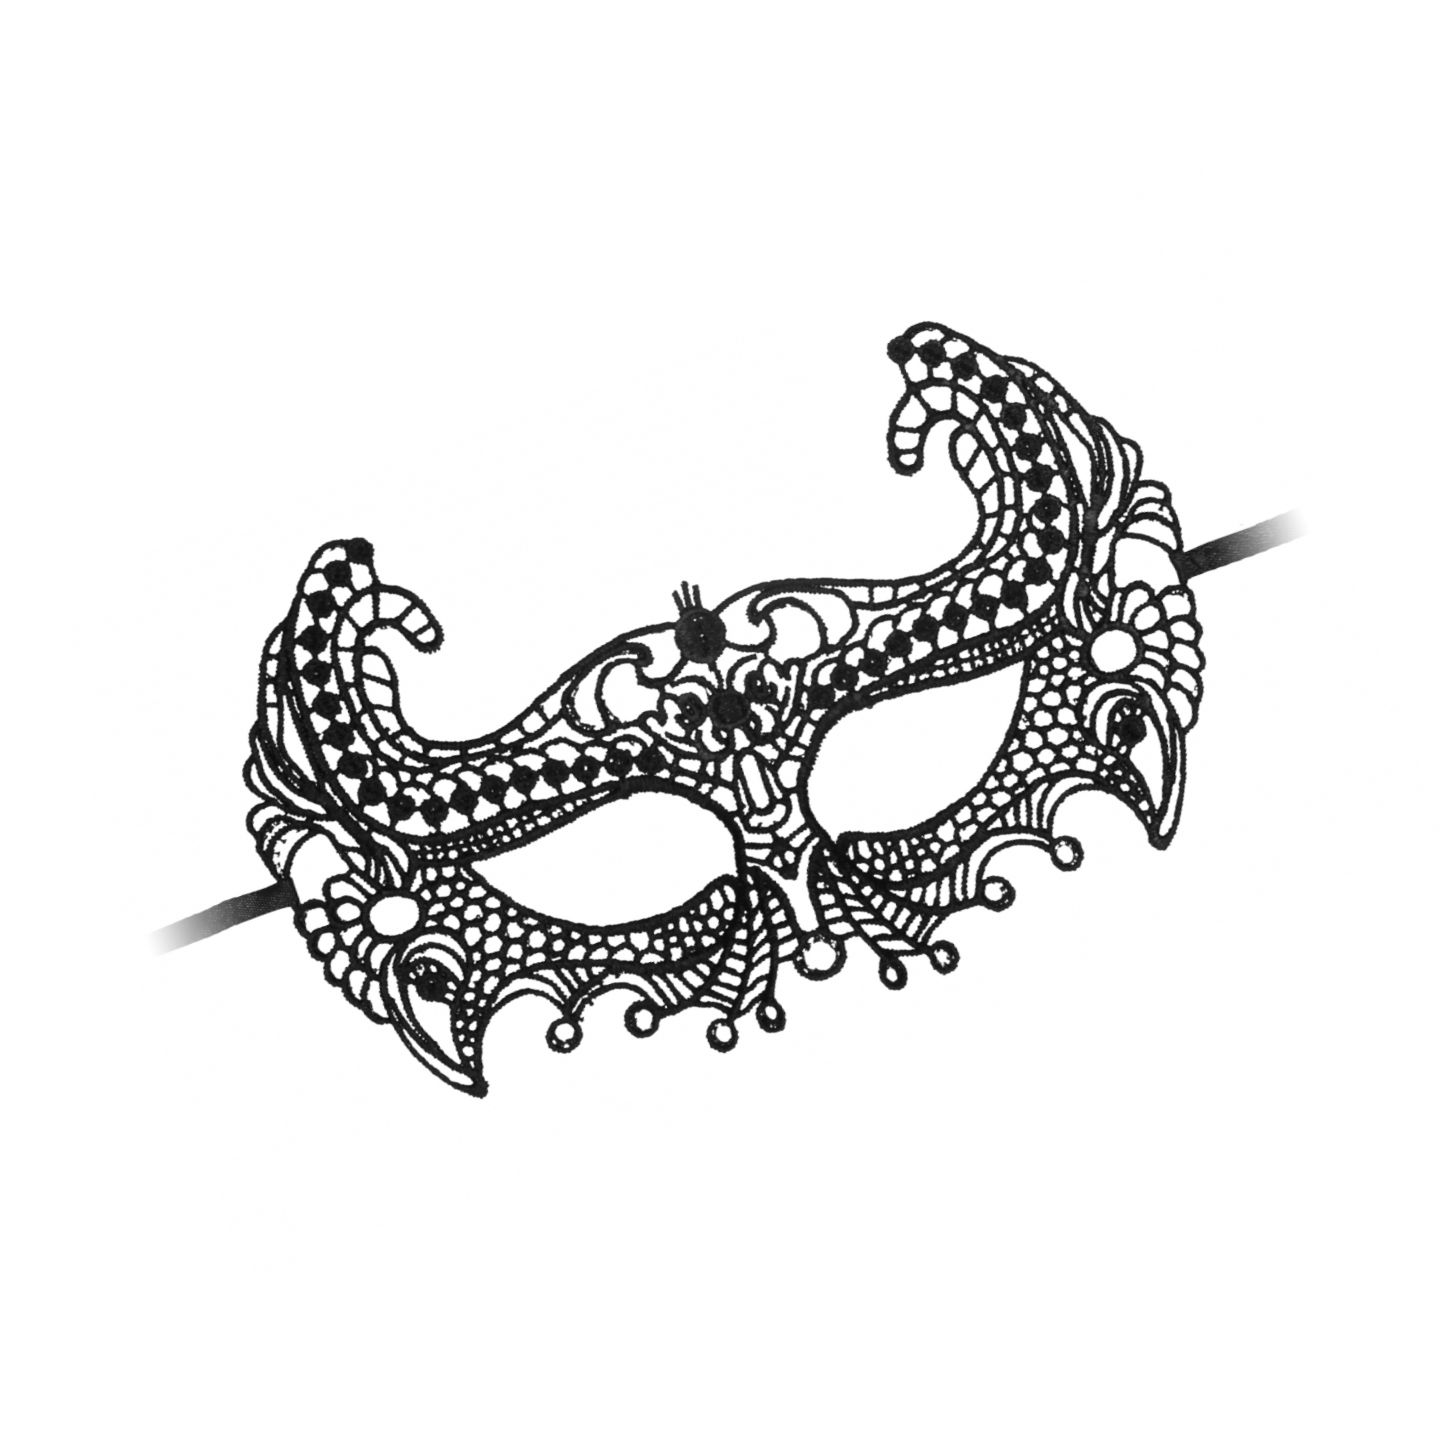 Empress Black Lace Mask